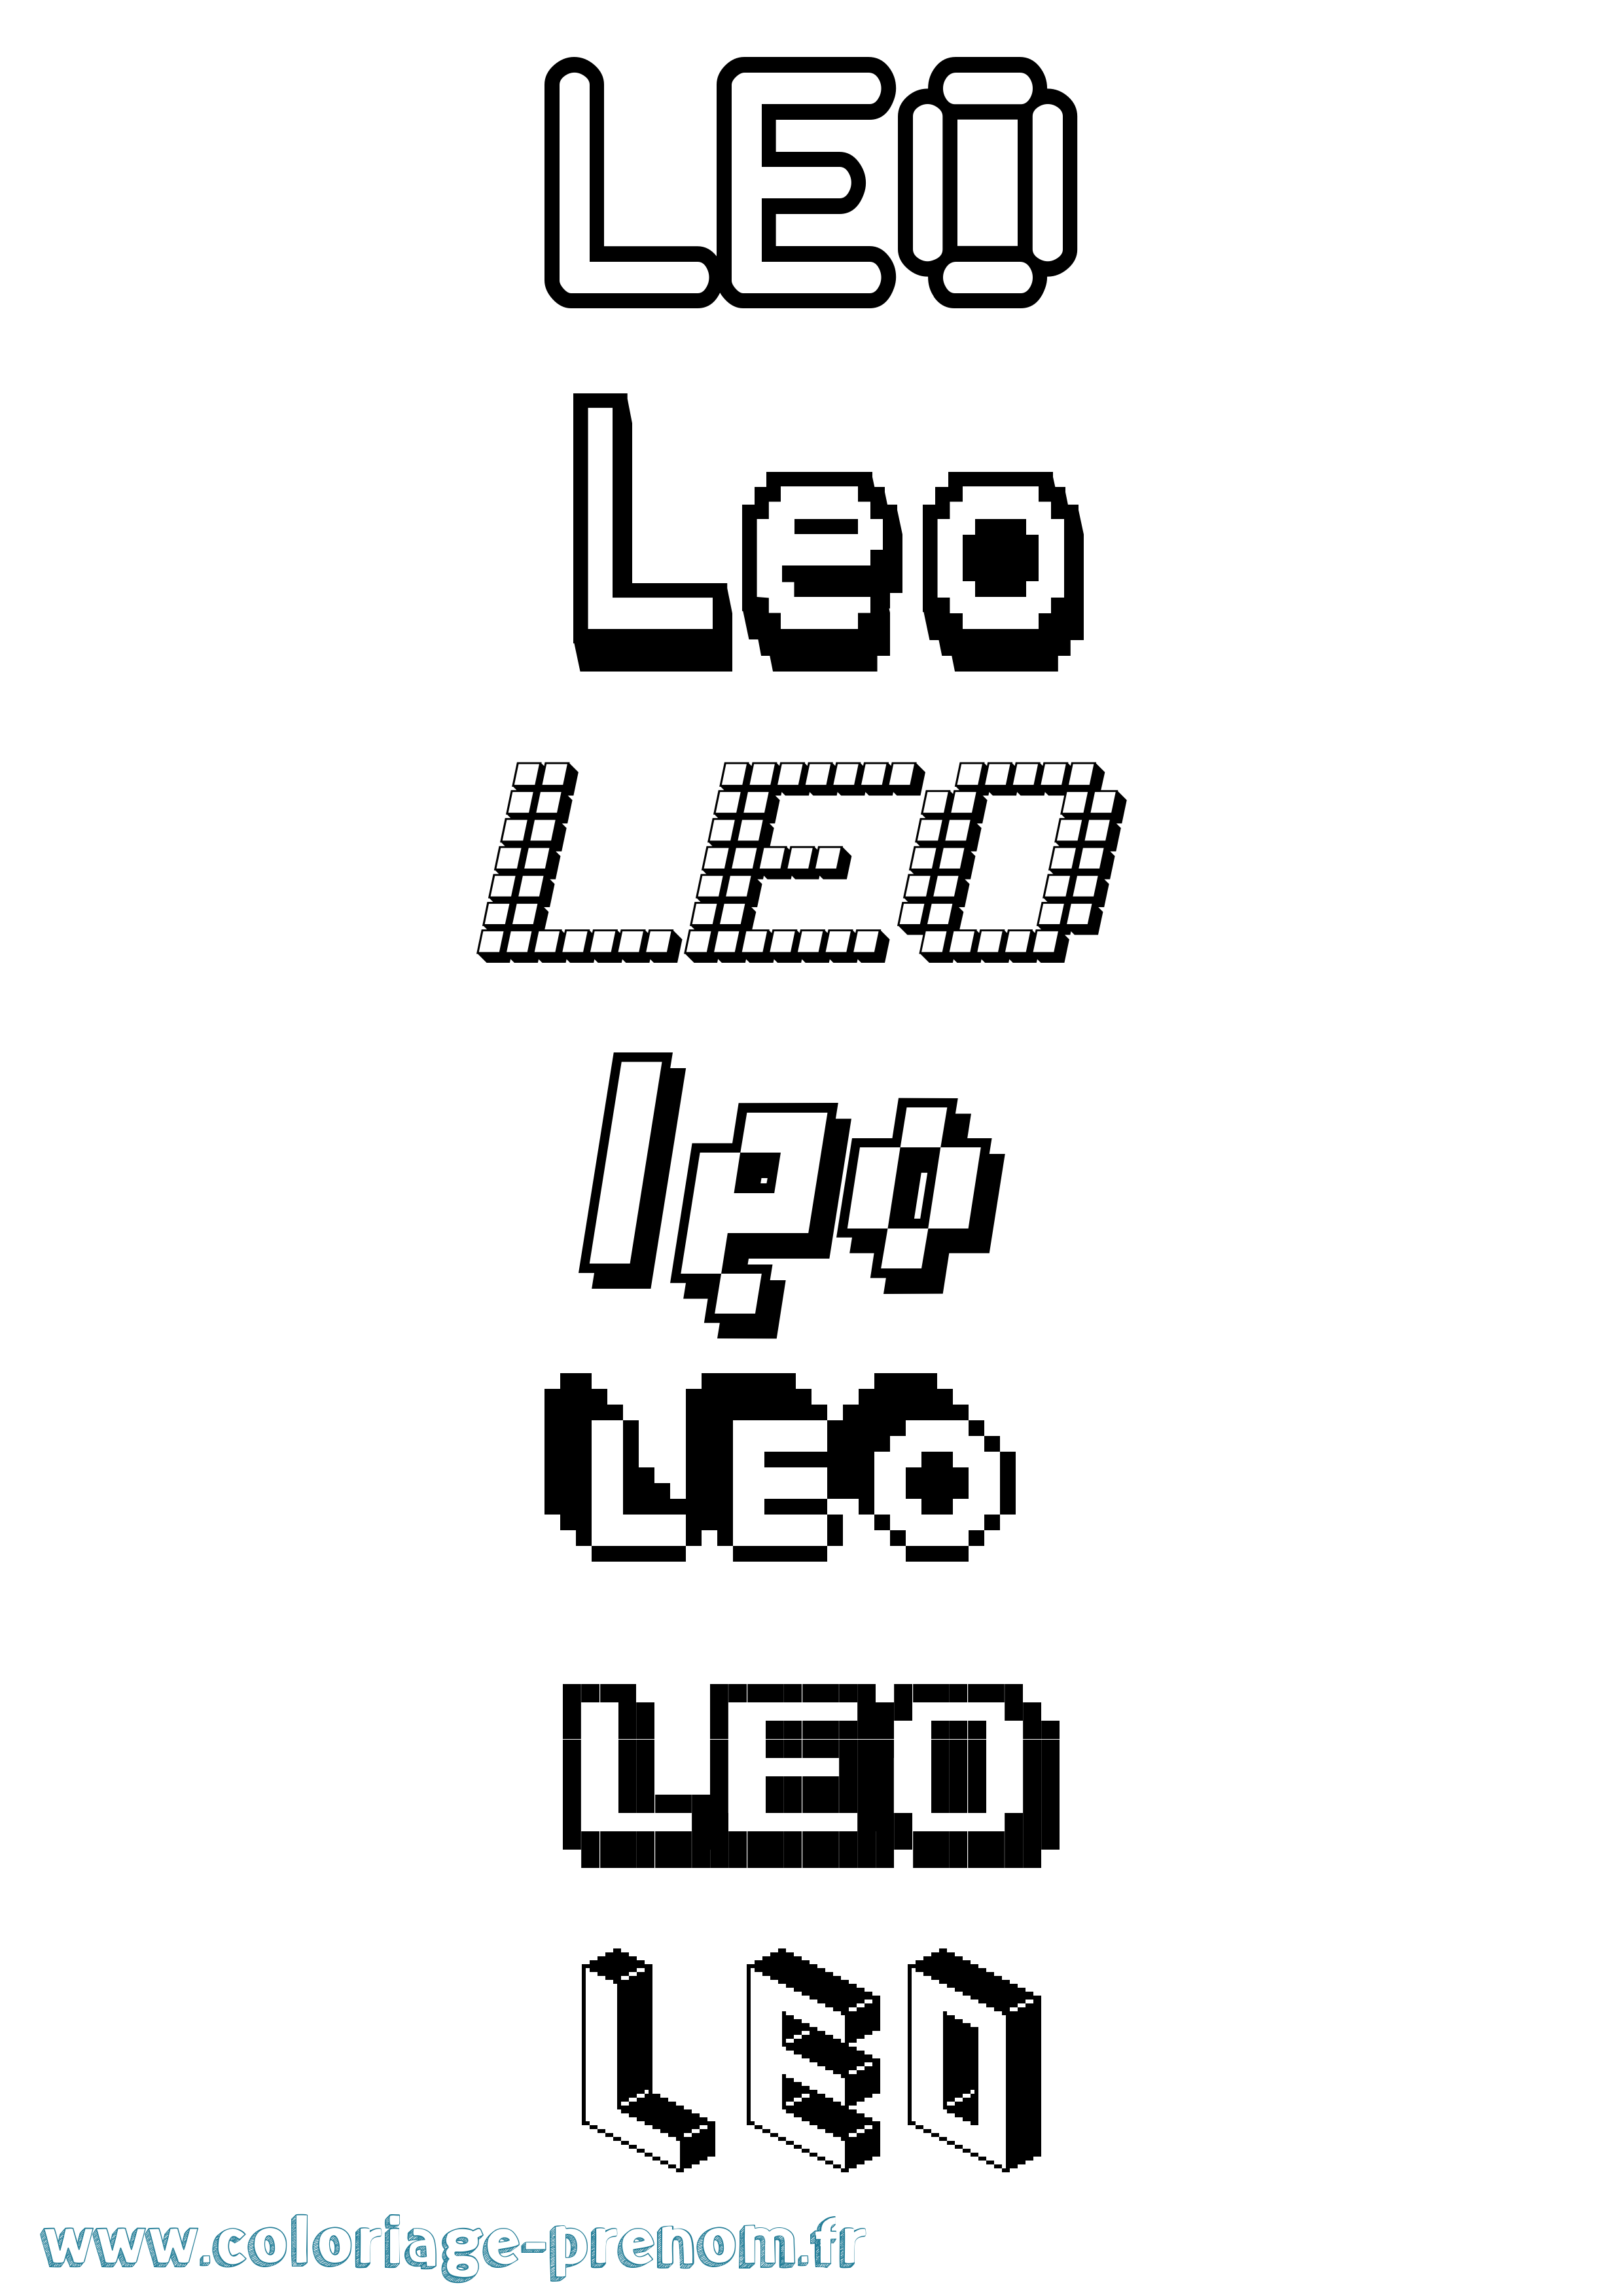 Coloriage prénom Leo Pixel